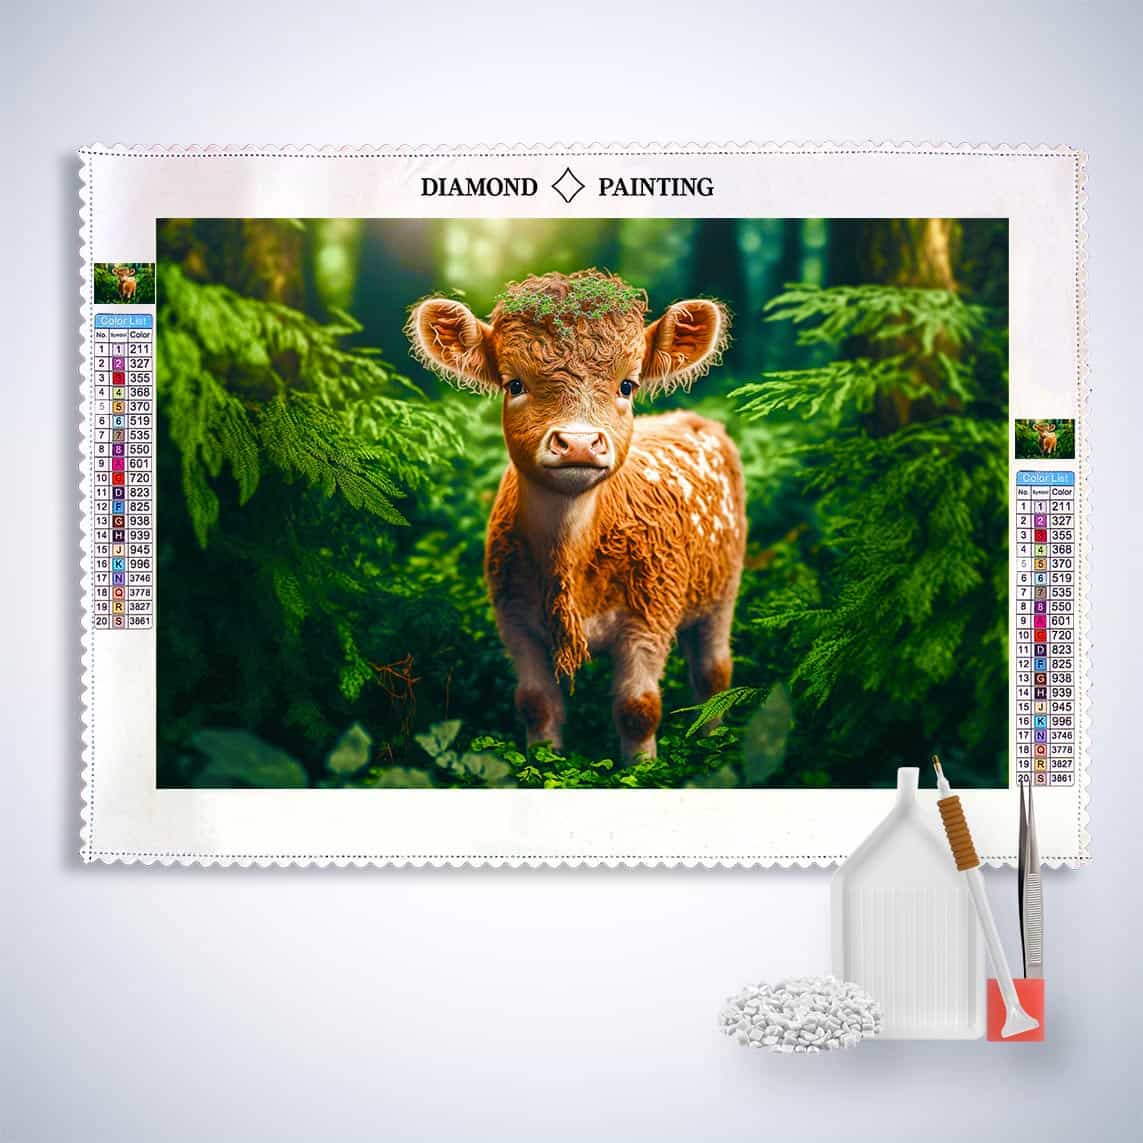 Diamond Painting - Kalb im Wald - gedruckt in Ultra-HD - Horizontal, Kuh, Tiere